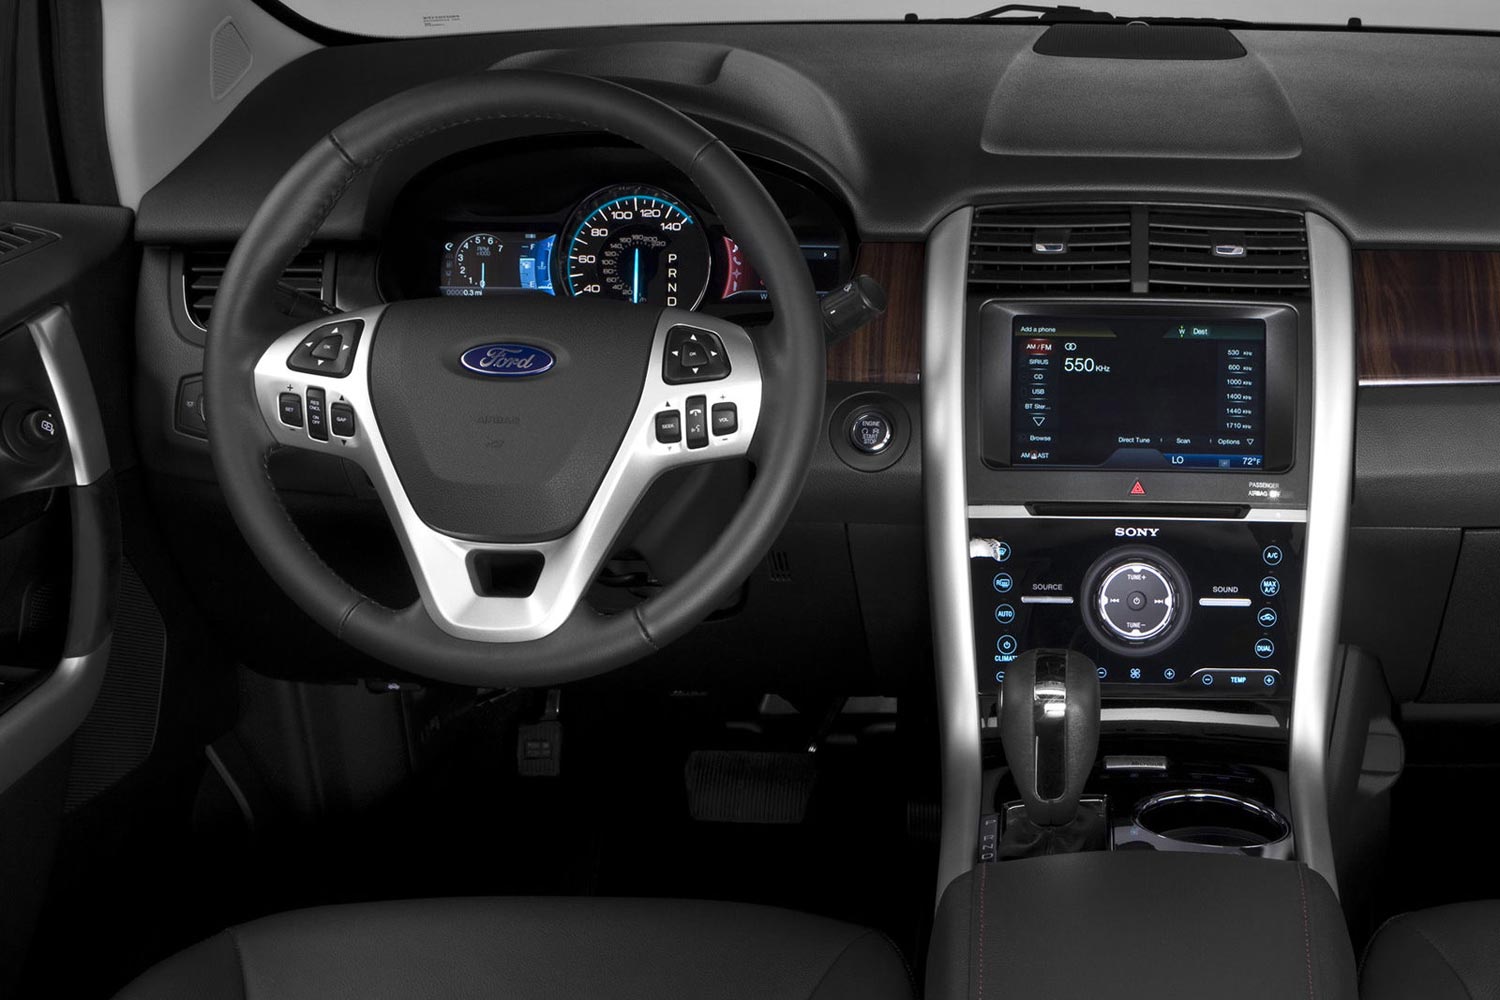 2.0 fwd. Ford Edge 2014 салон. Ford Edge 2014 интерьер. Ford Edge салон. Ford Edge 1.